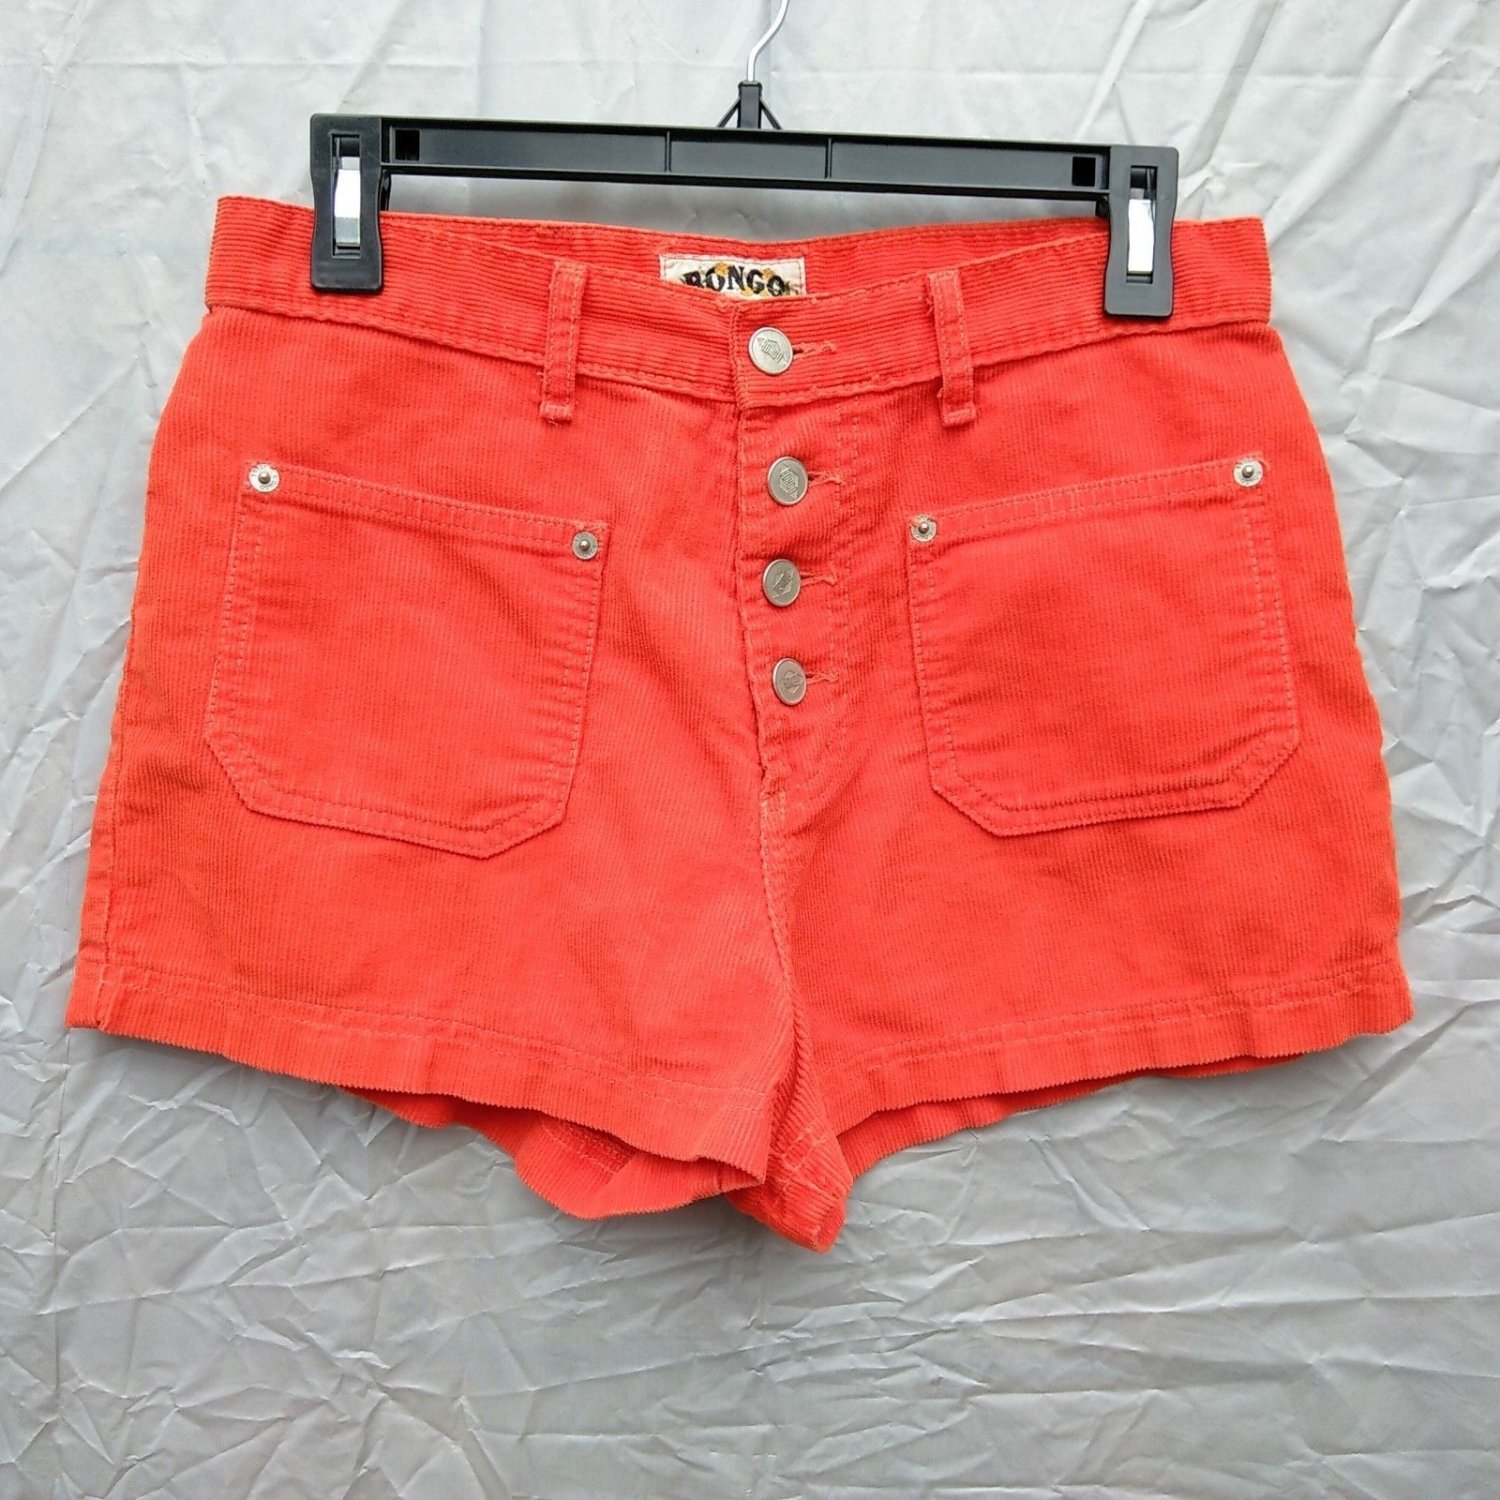 Vintage Bongo High Rise Women's Short Shorts Waist is 29 inches Orange ...